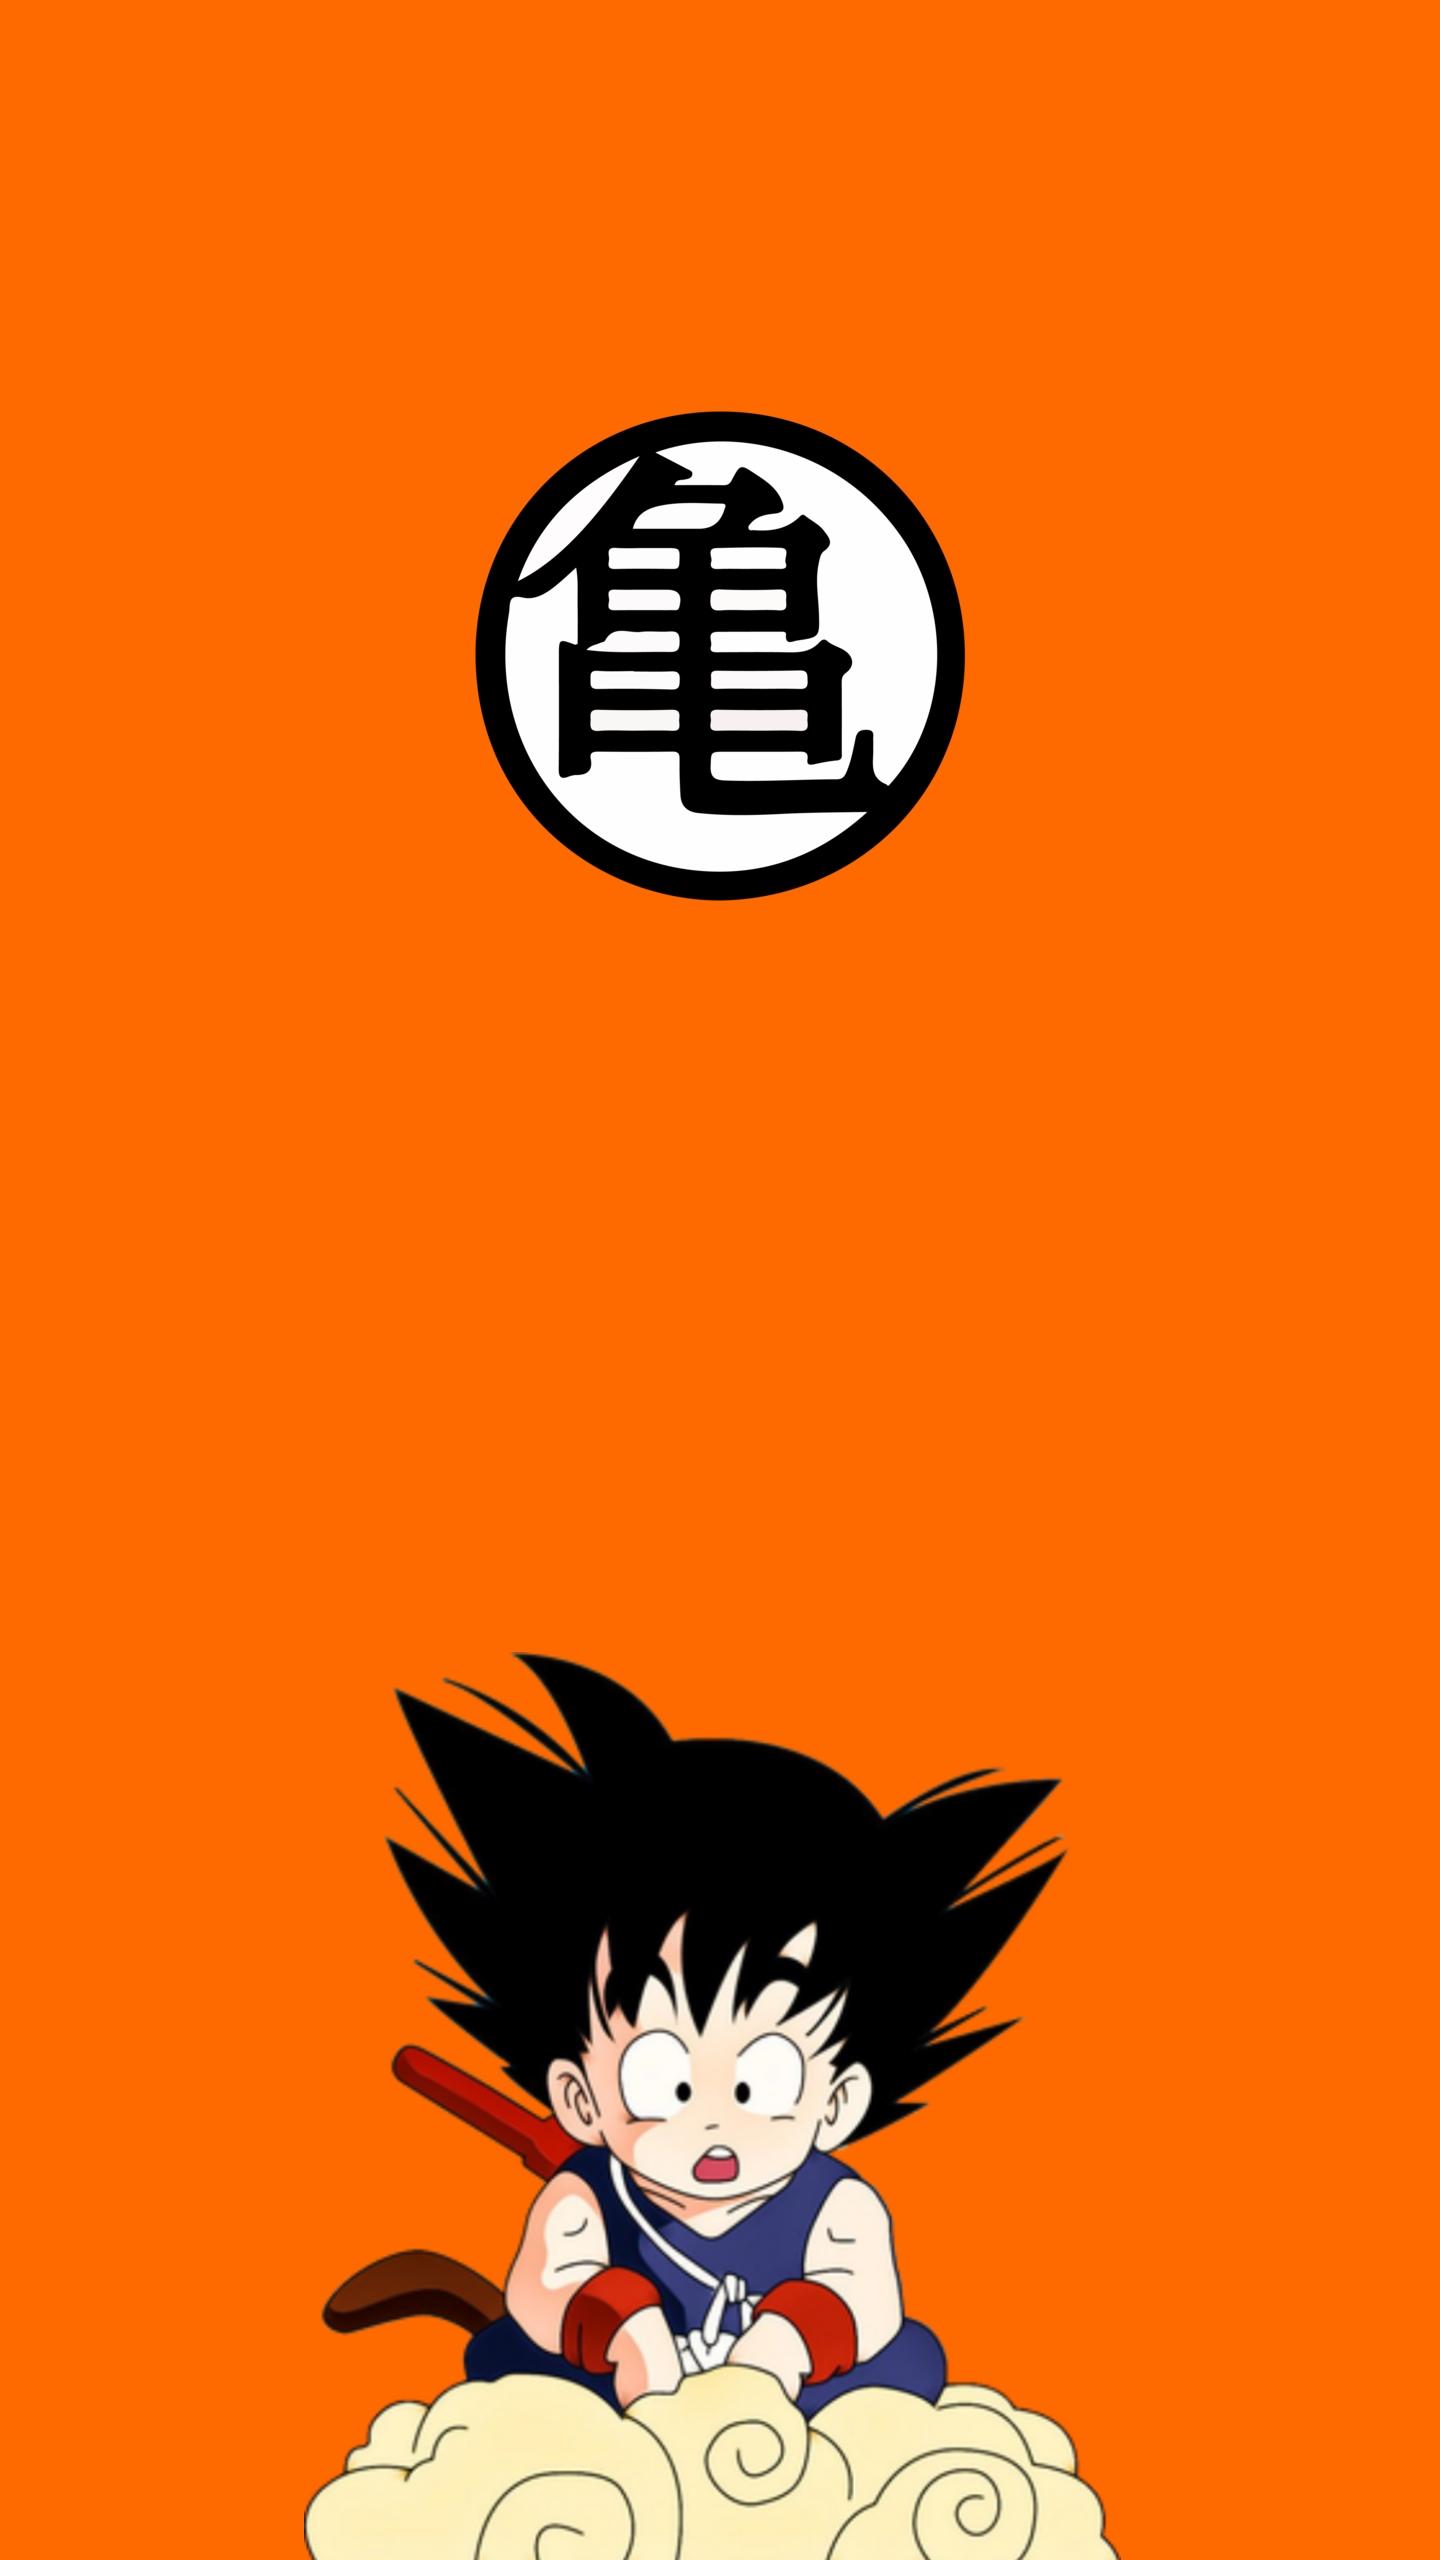 1440x2560] -1440p A Simple Kid Goku Phone Wallpaper I Made [Wallpaper]